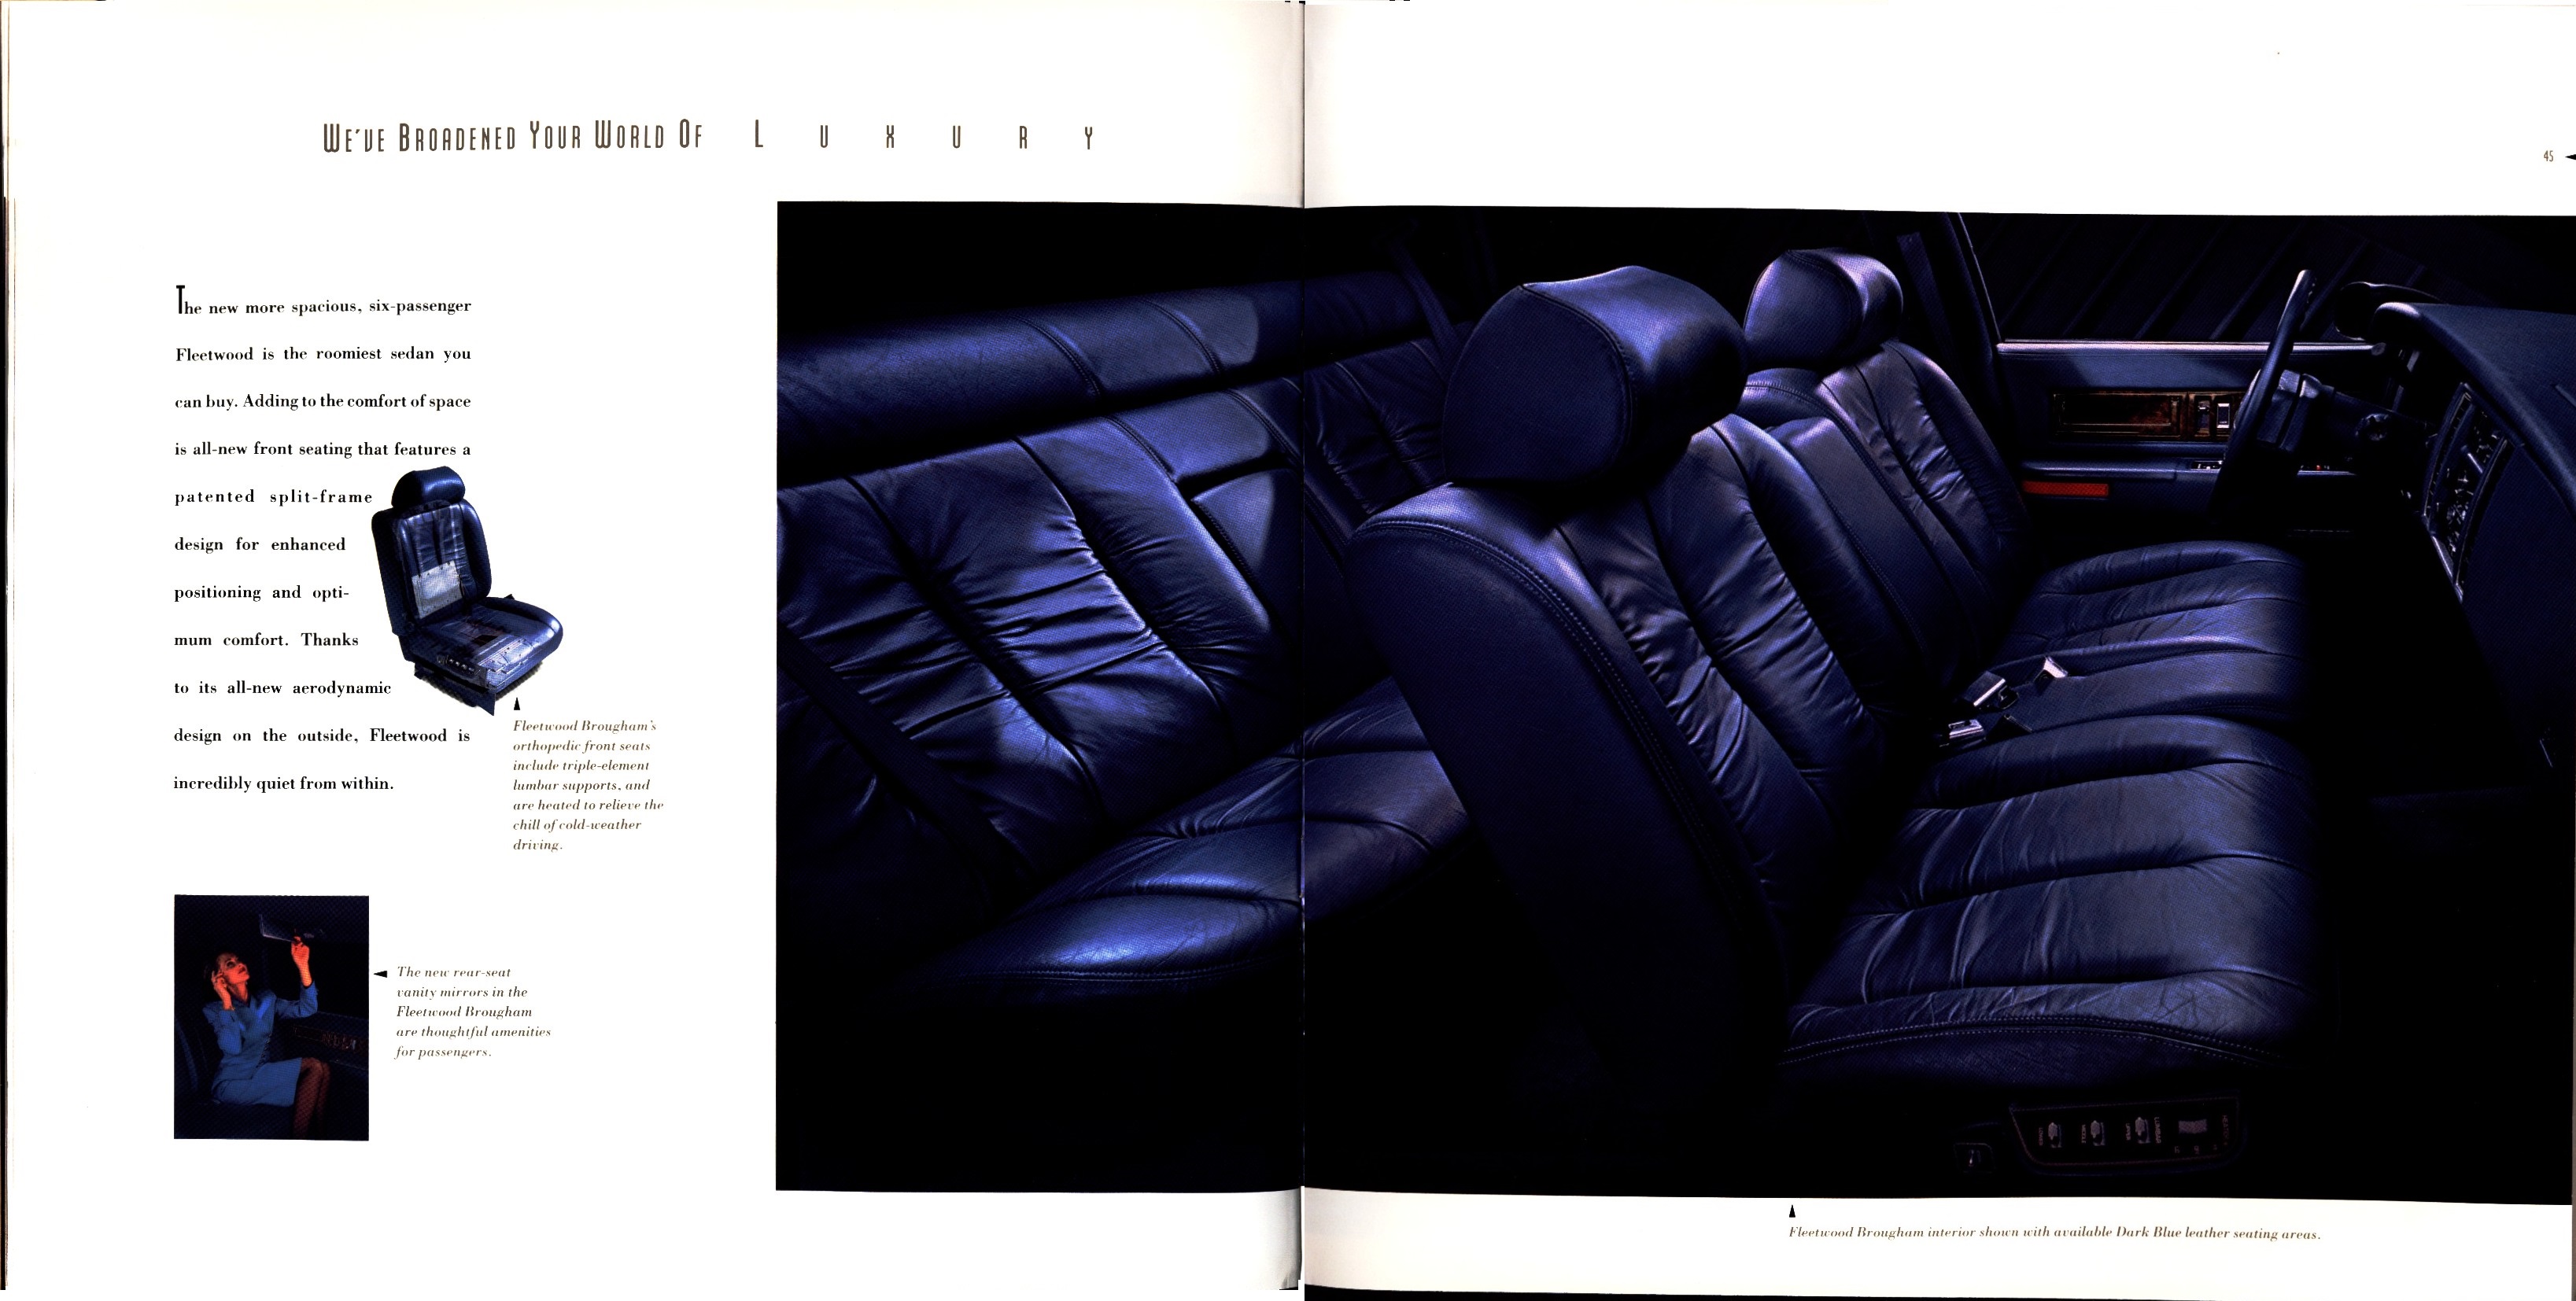 1993 Cadillac Full Line Prestige Brochure 44-45